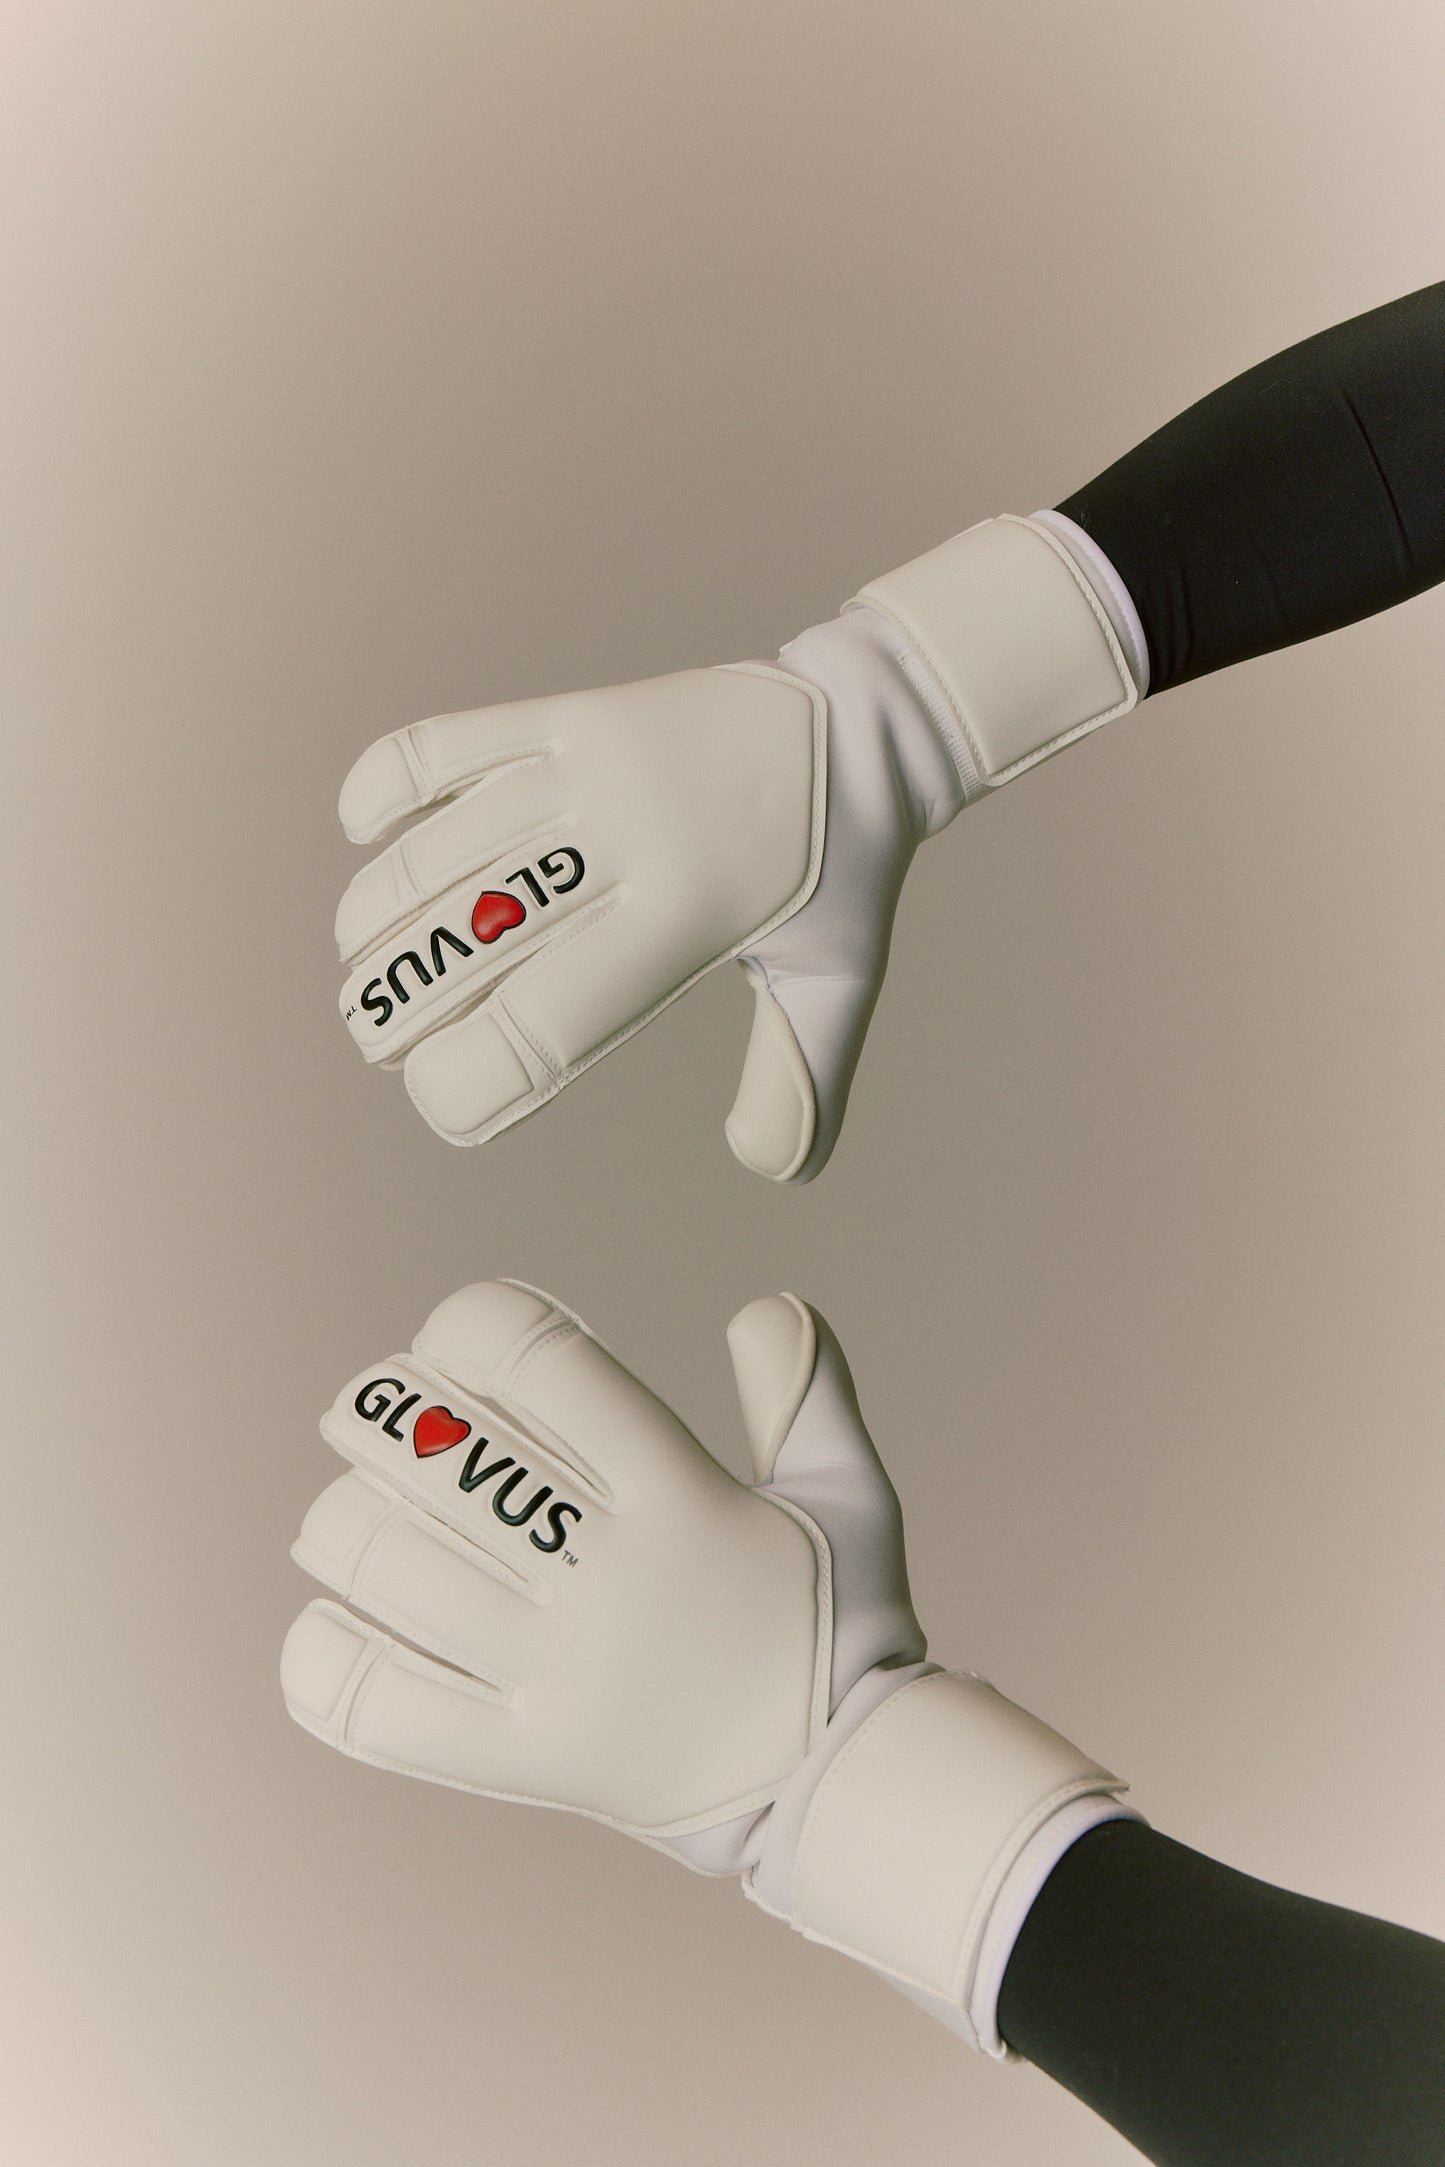 Glovus Goalkeeper Glove